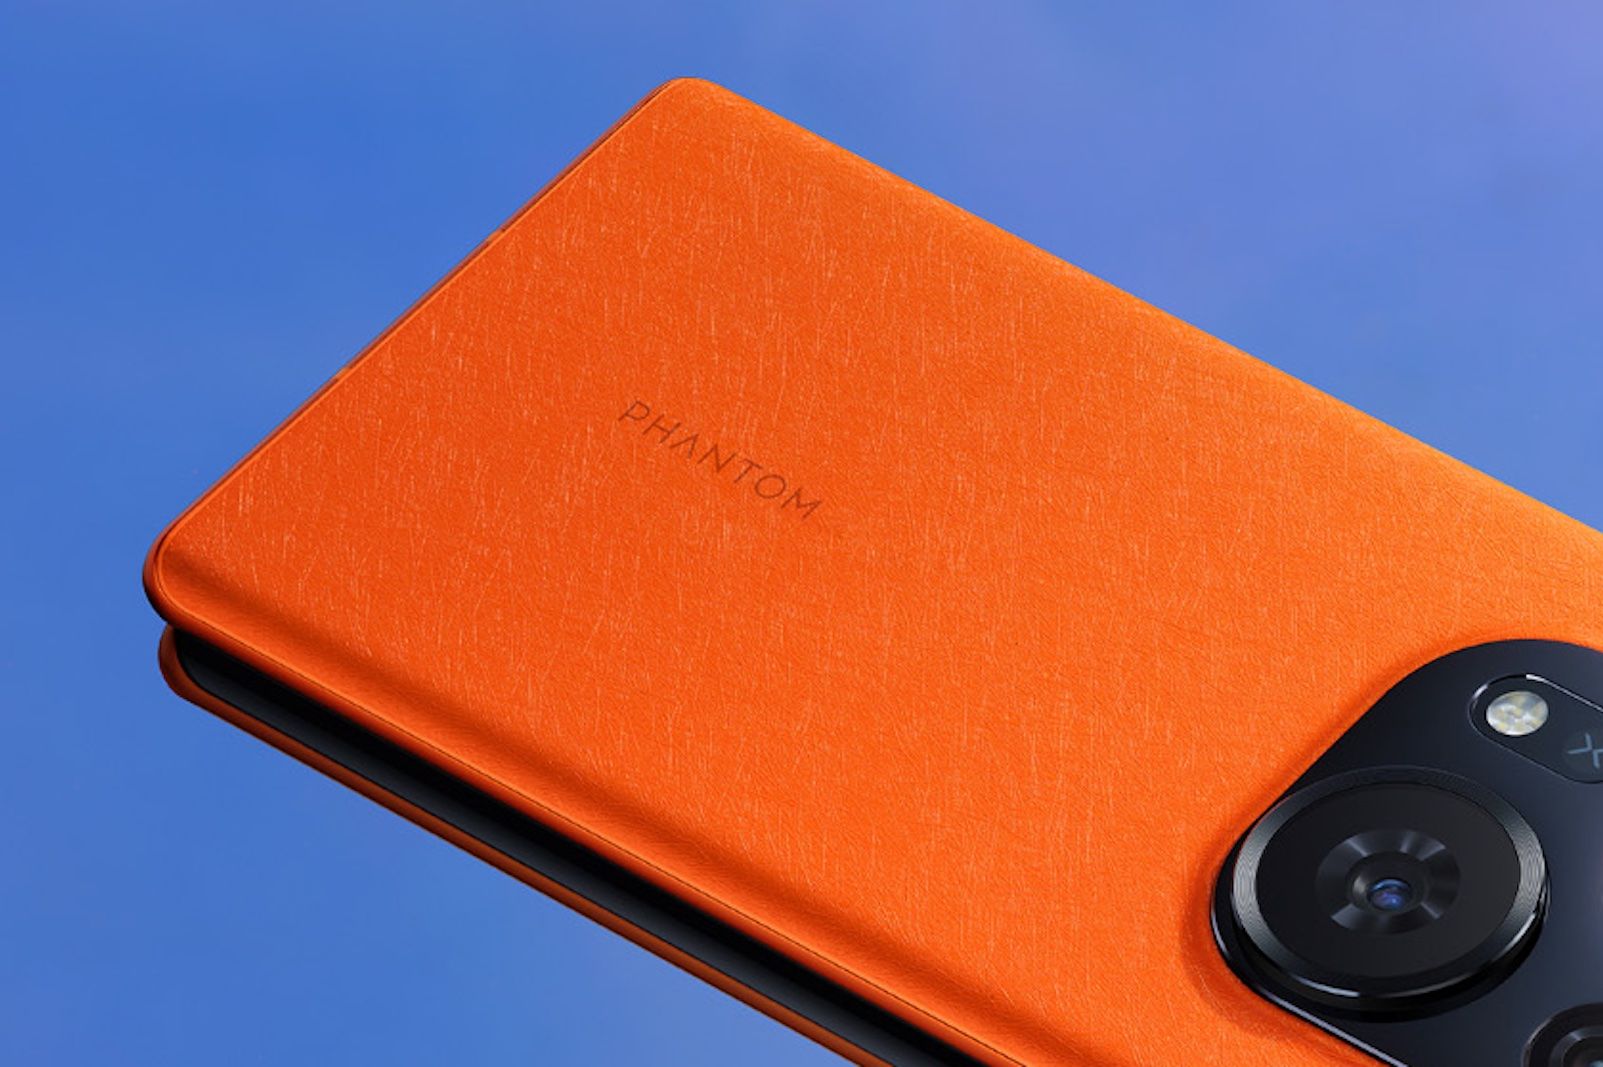 Tecno Phantom phone in orange on blue background